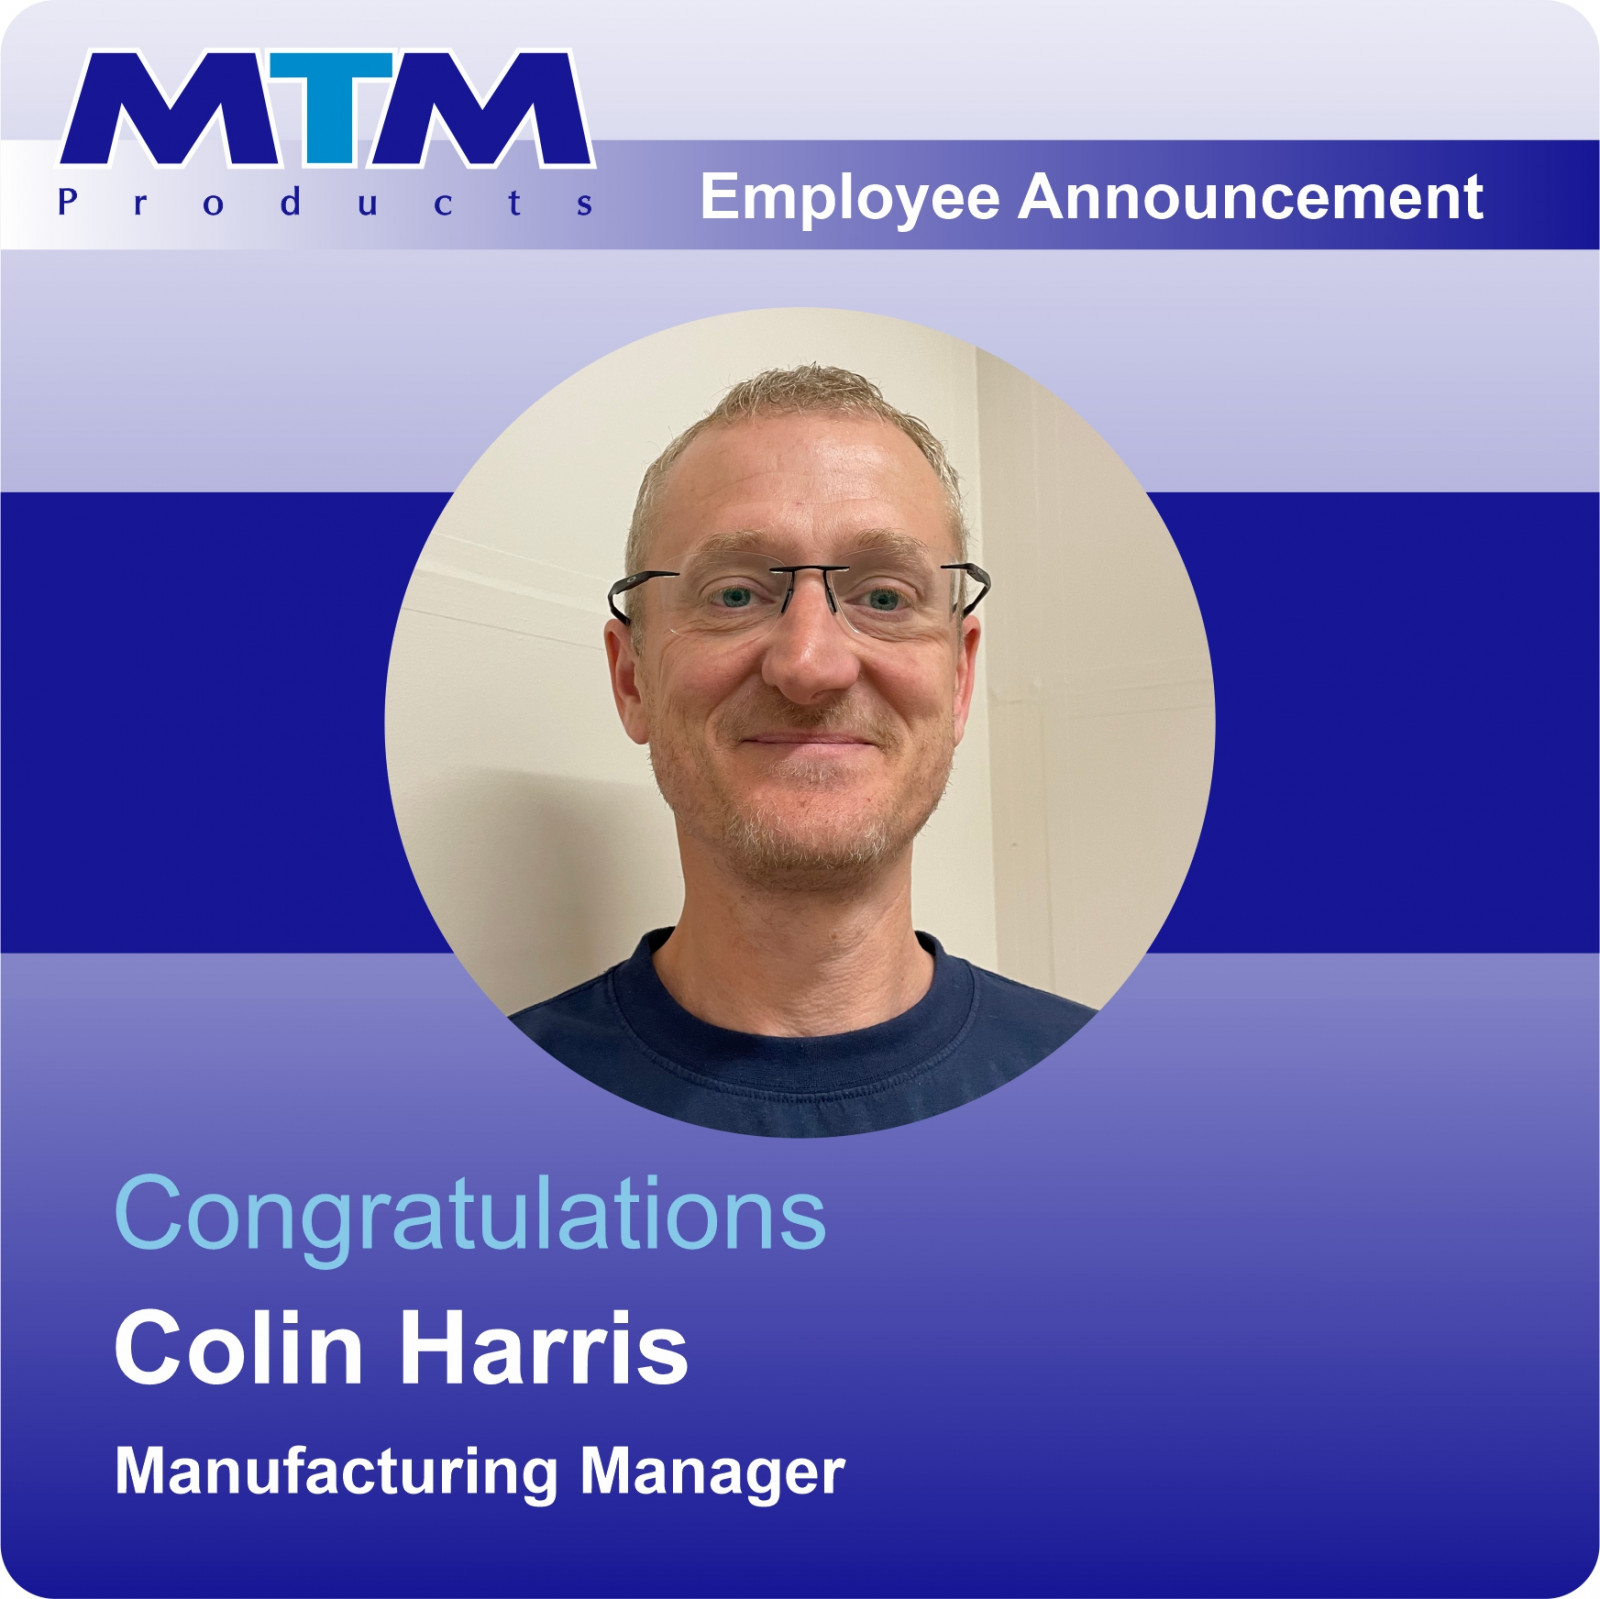 Employee Announcement - Colin Harris